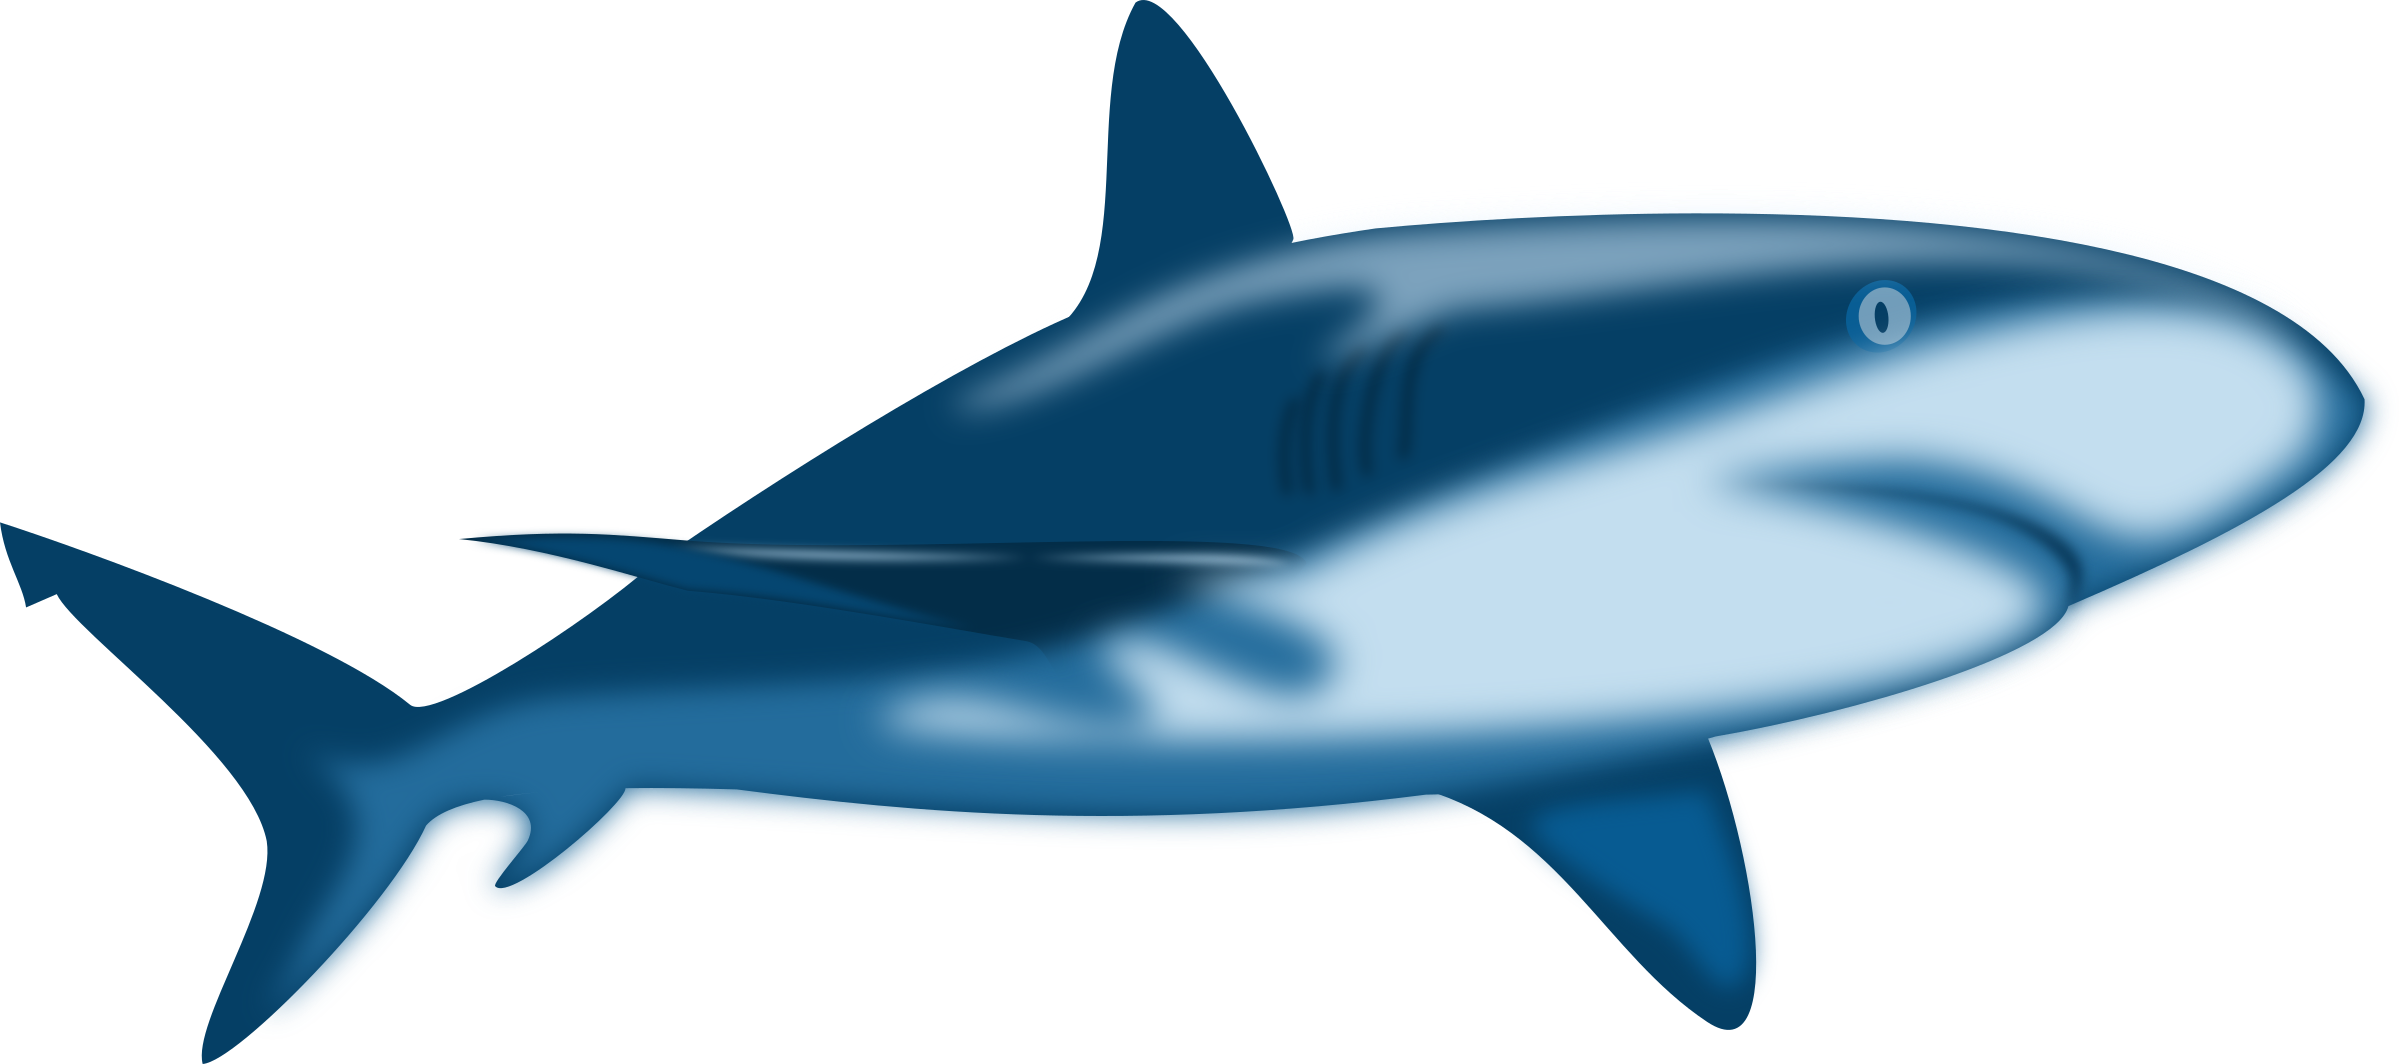 Blue Shark Vector Art image - Free stock photo - Public Domain photo